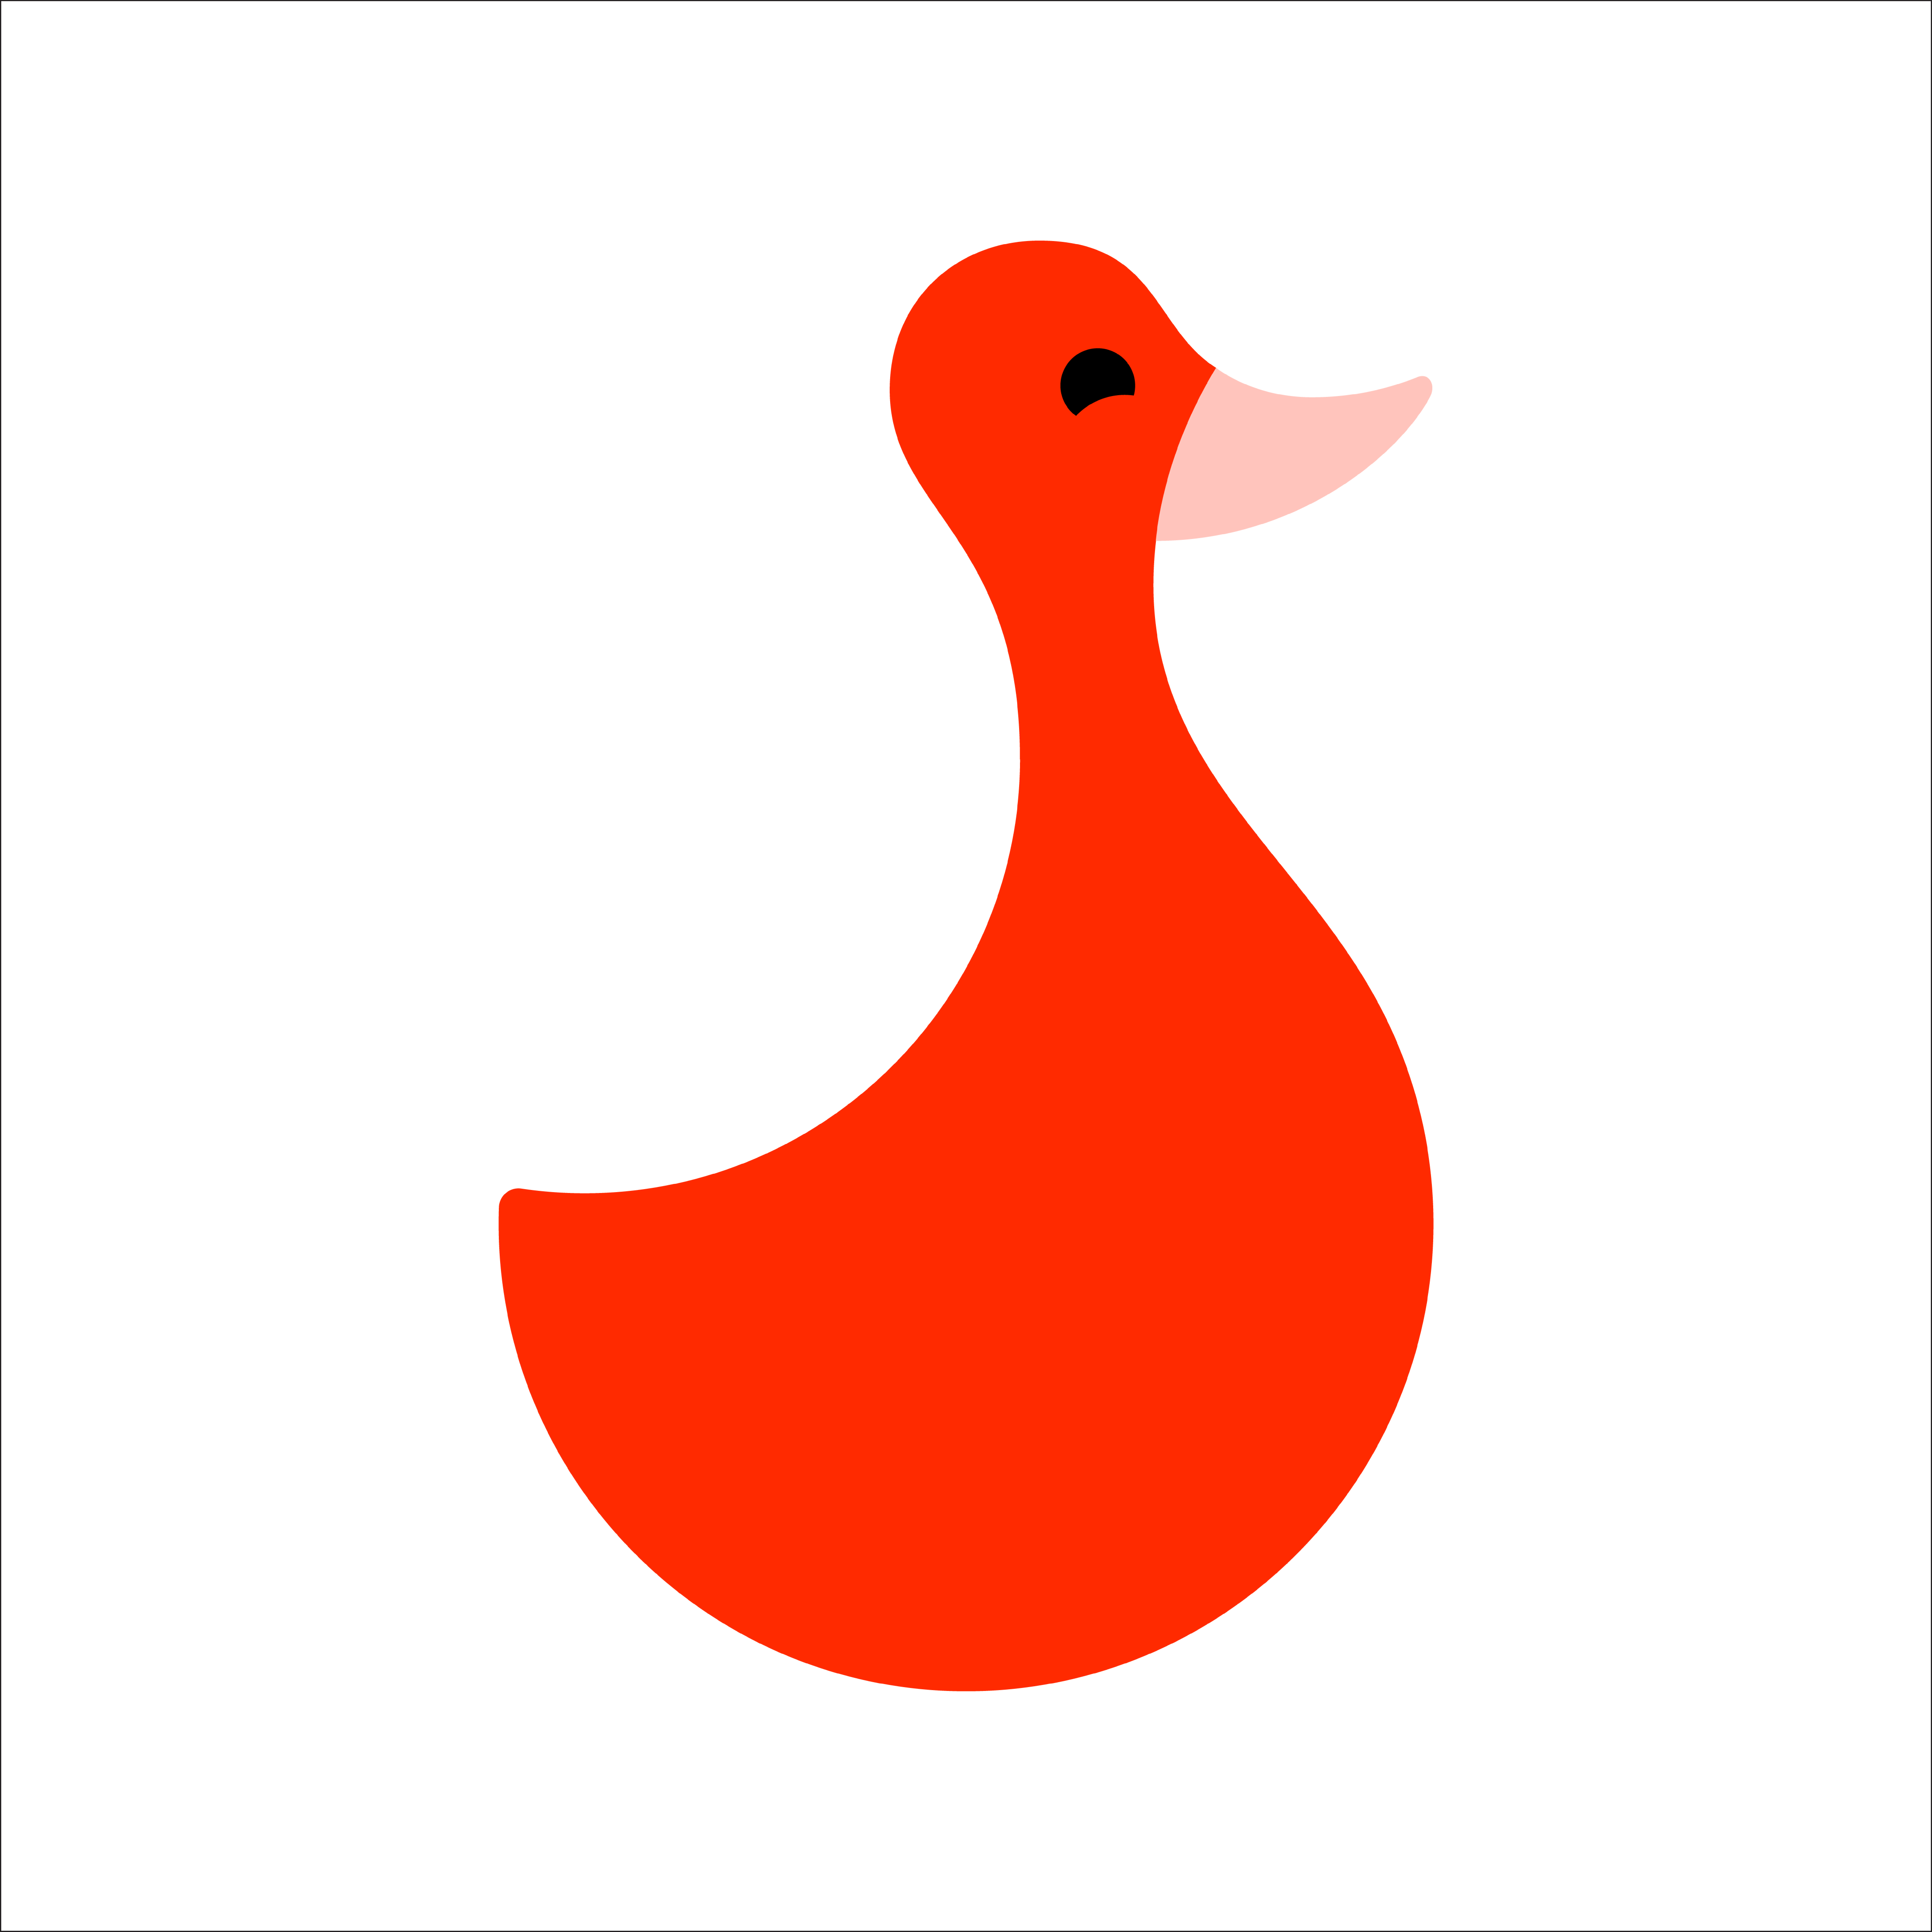 LendrTendr Mascot 'Lenny the Duck' logo design by logo designer DSR Branding for your inspiration and for the worlds largest logo competition